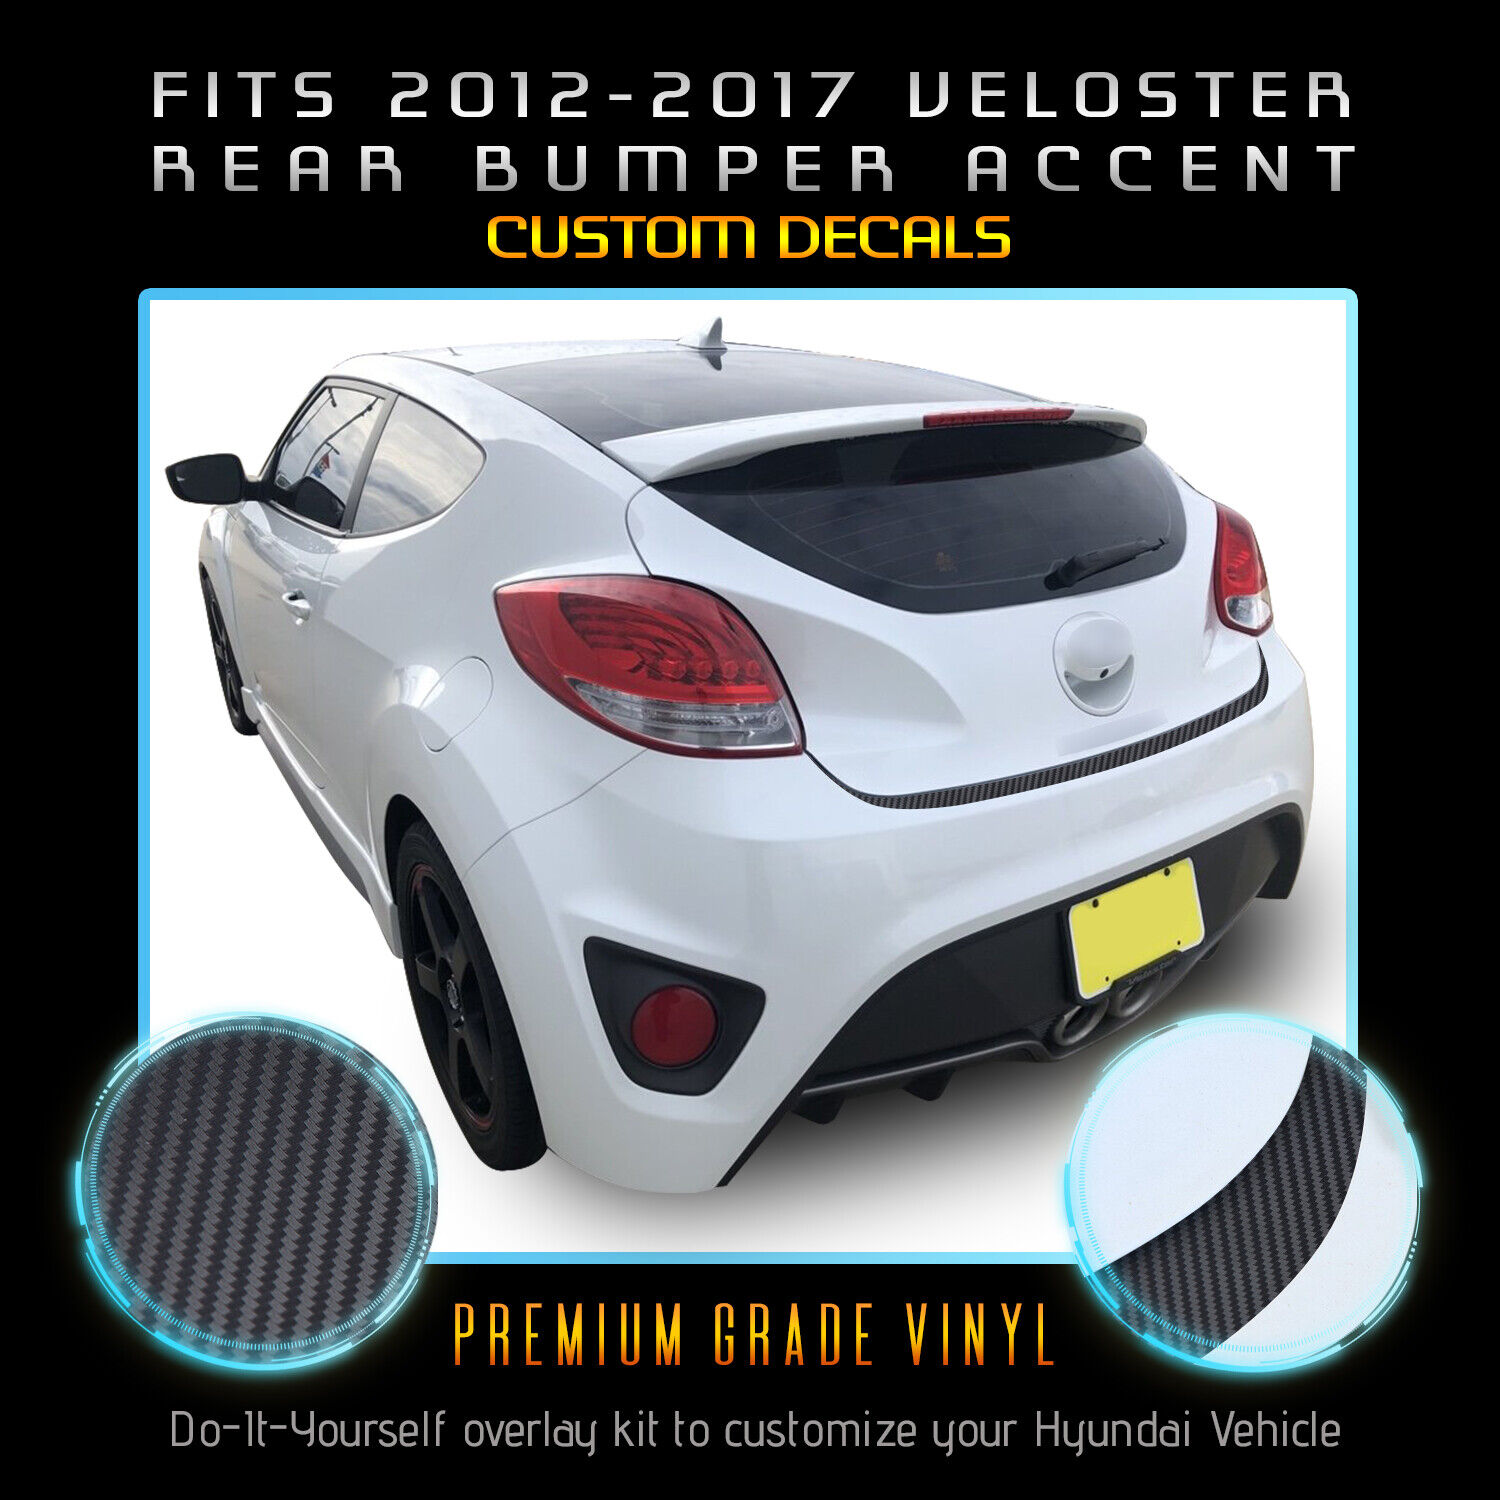 For 2012-2017 Hyundai Veloster Rear Trunk Trim Accent Decal - Matte Carbon Fiber